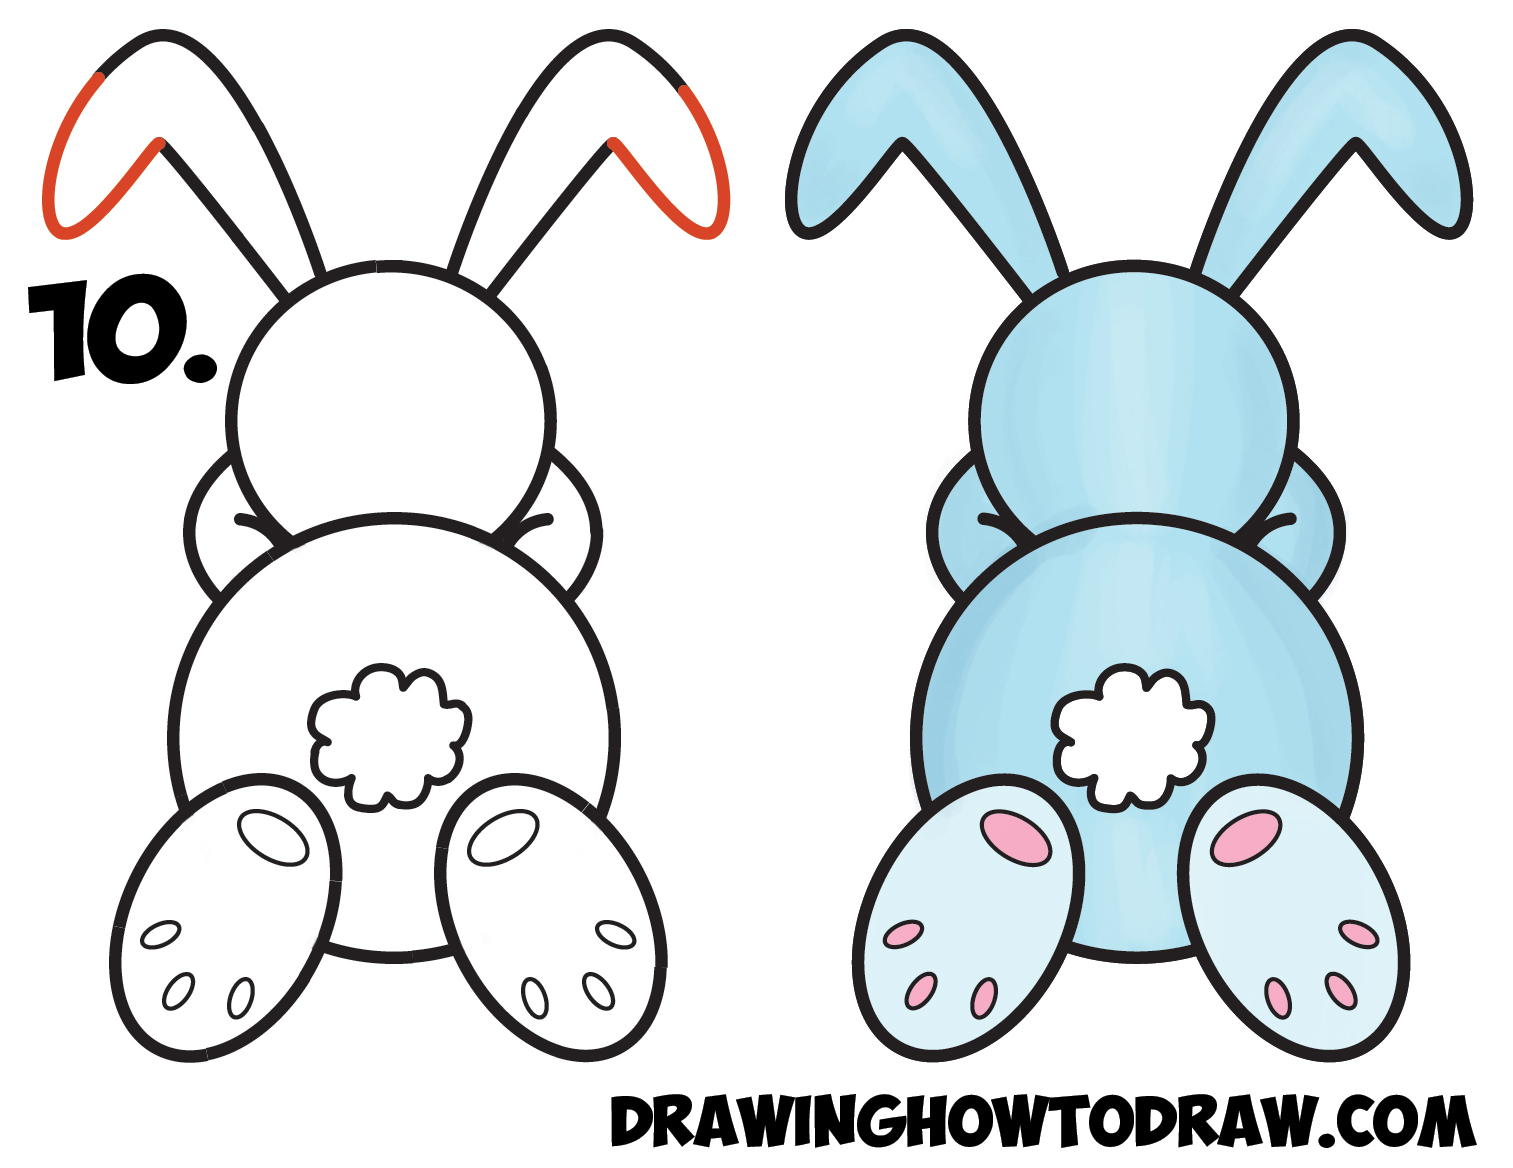 How to Draw a Cute Cartoon Sleeping Bunny Rabbit from #8 Shape Easy